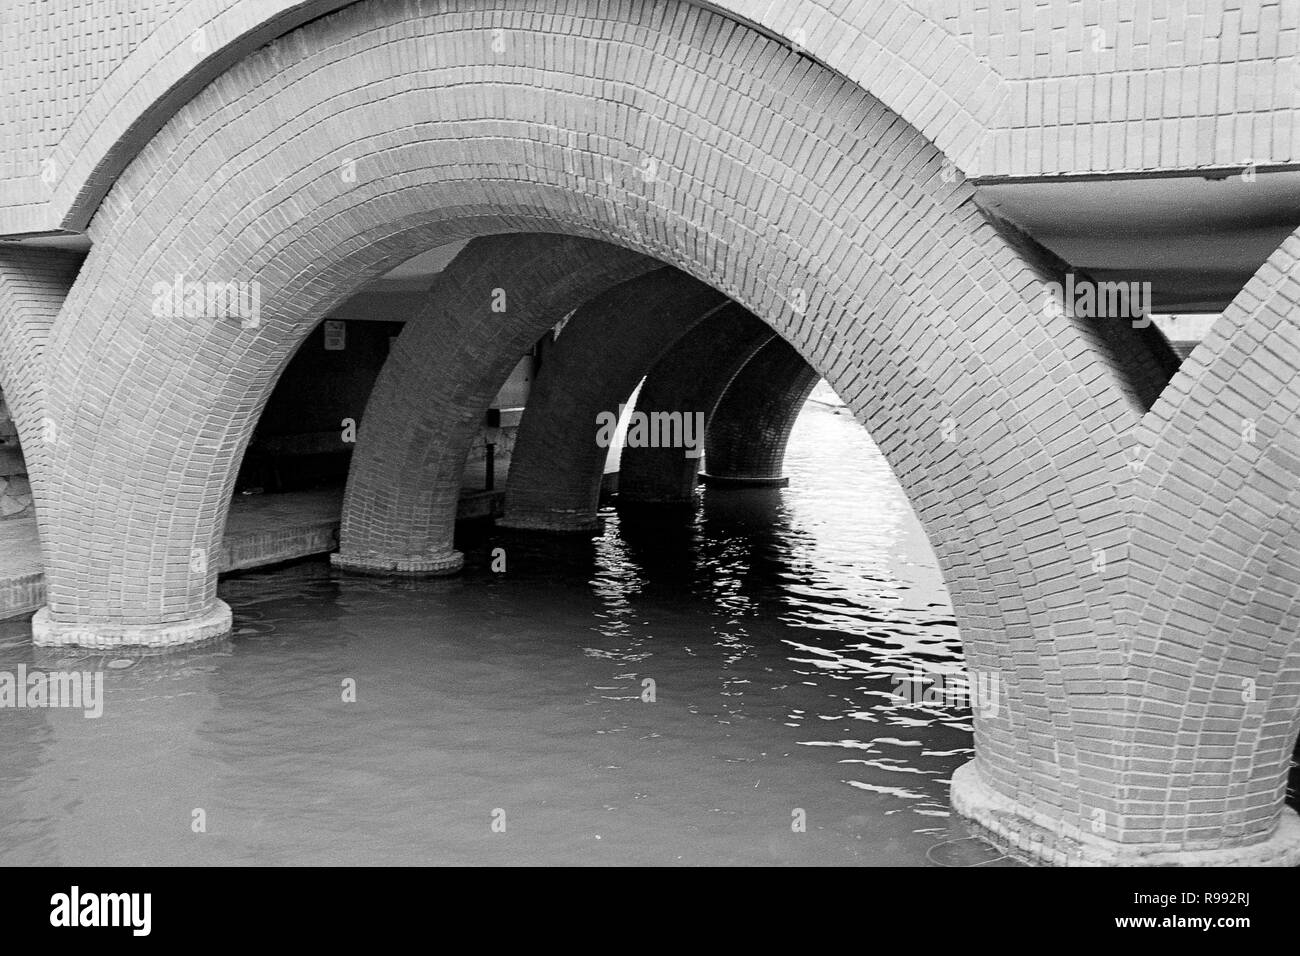 MONTERREY, NL/MEXICO - NOV 10, 2003: Arches form a mall bridge to cross the canal at Santa Lucia walk, near the Macroplaza Stock Photo